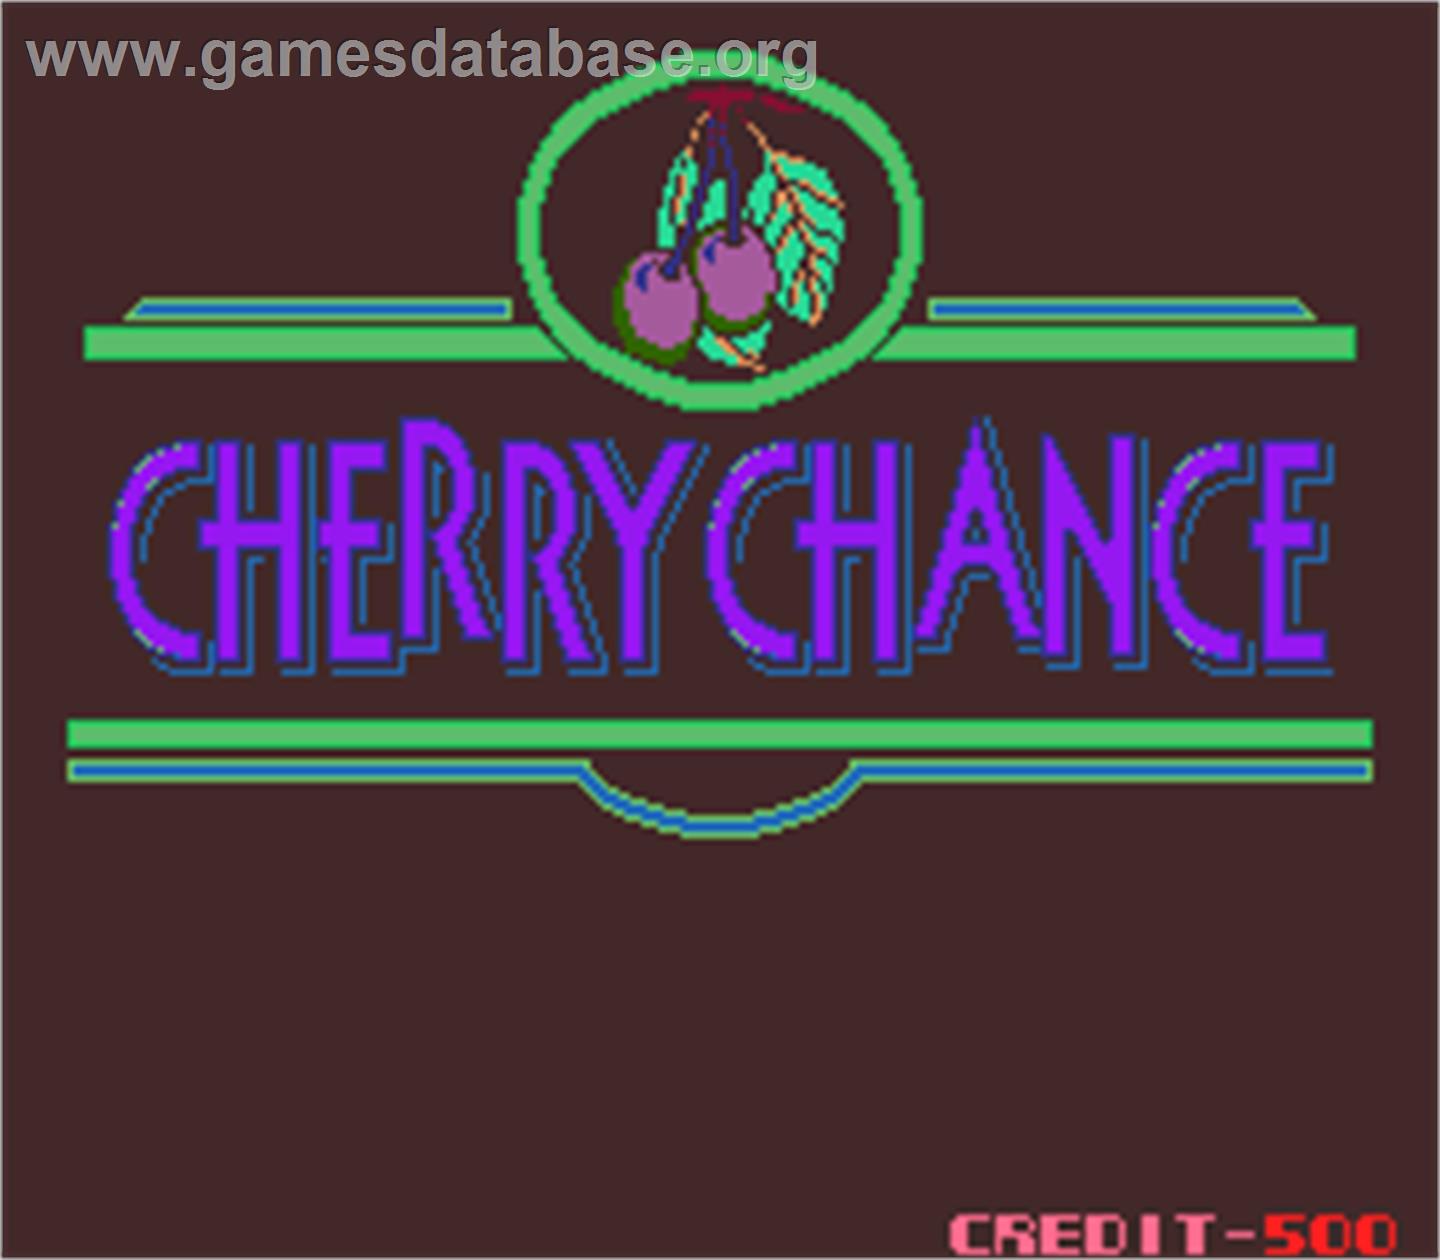 Cherry Chance - Arcade - Artwork - Title Screen